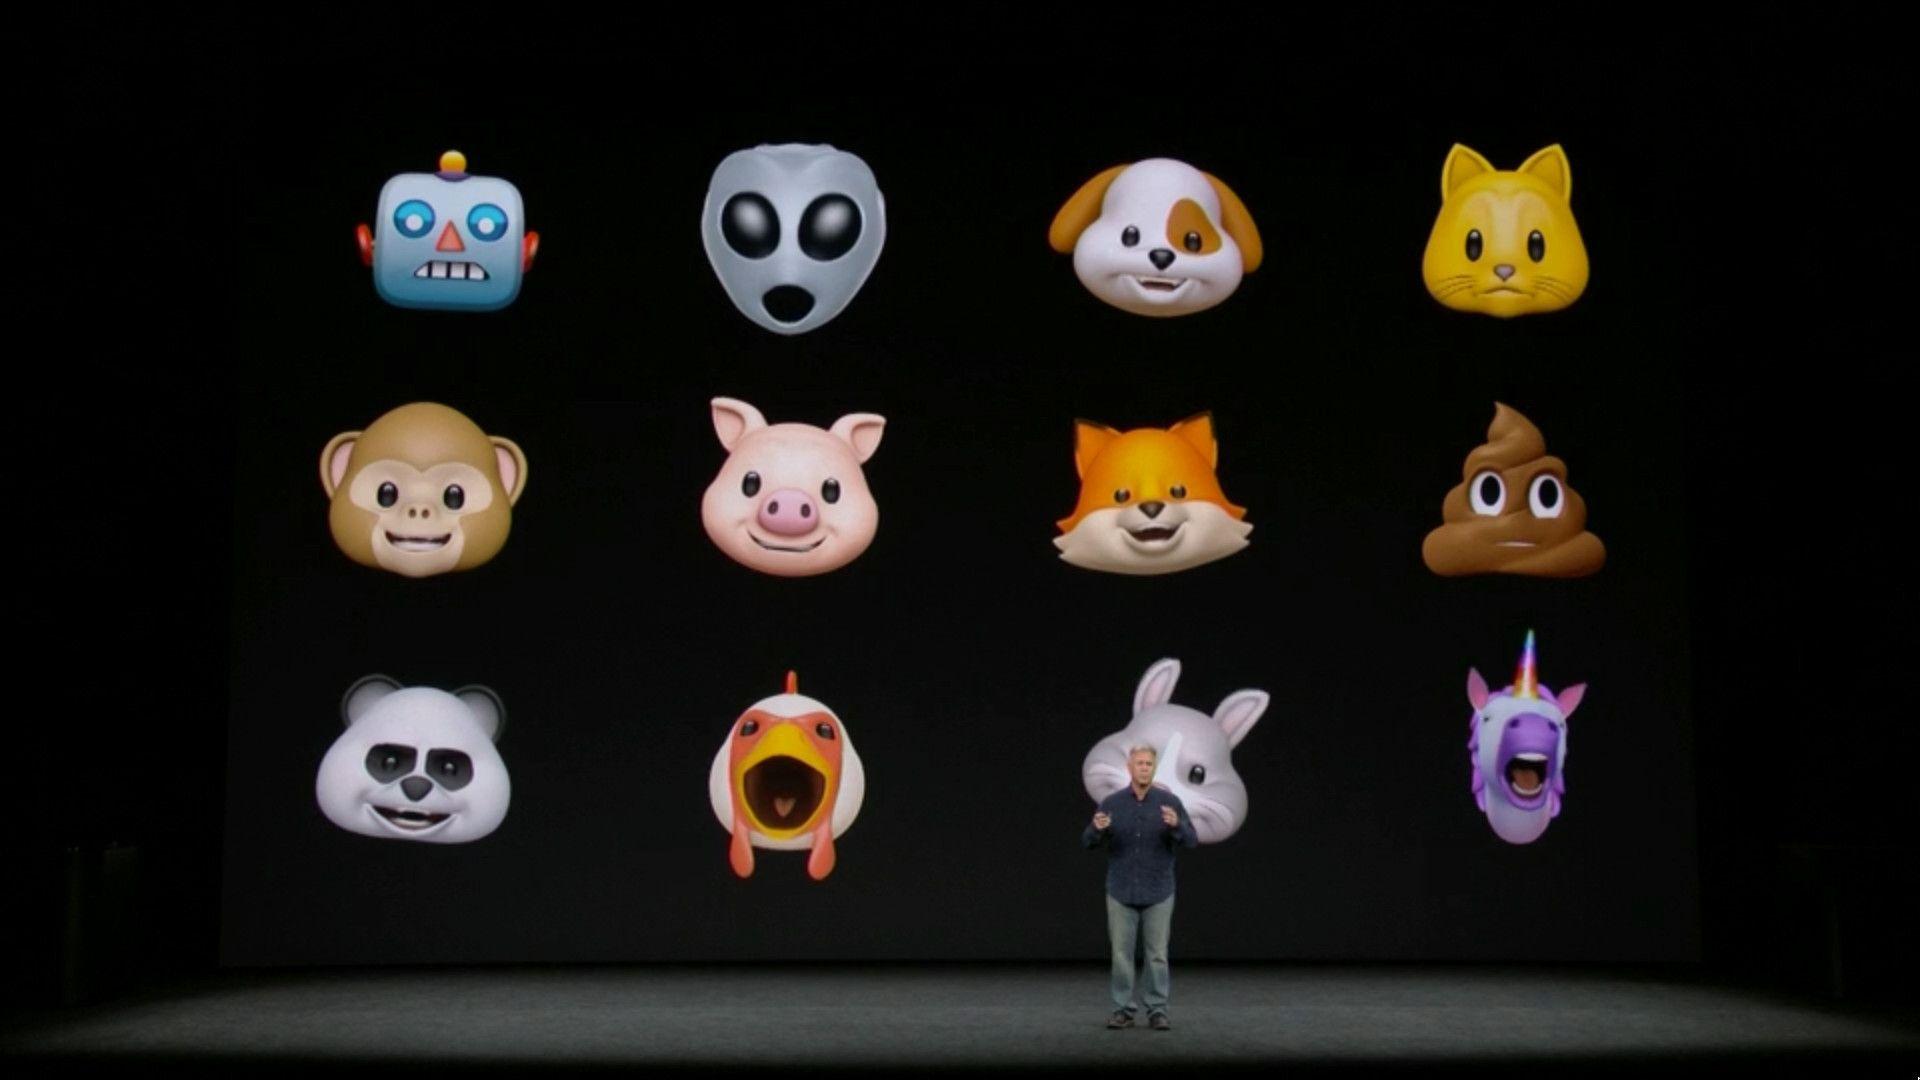 Apple announces Animoji, animated emoji for iPhone X